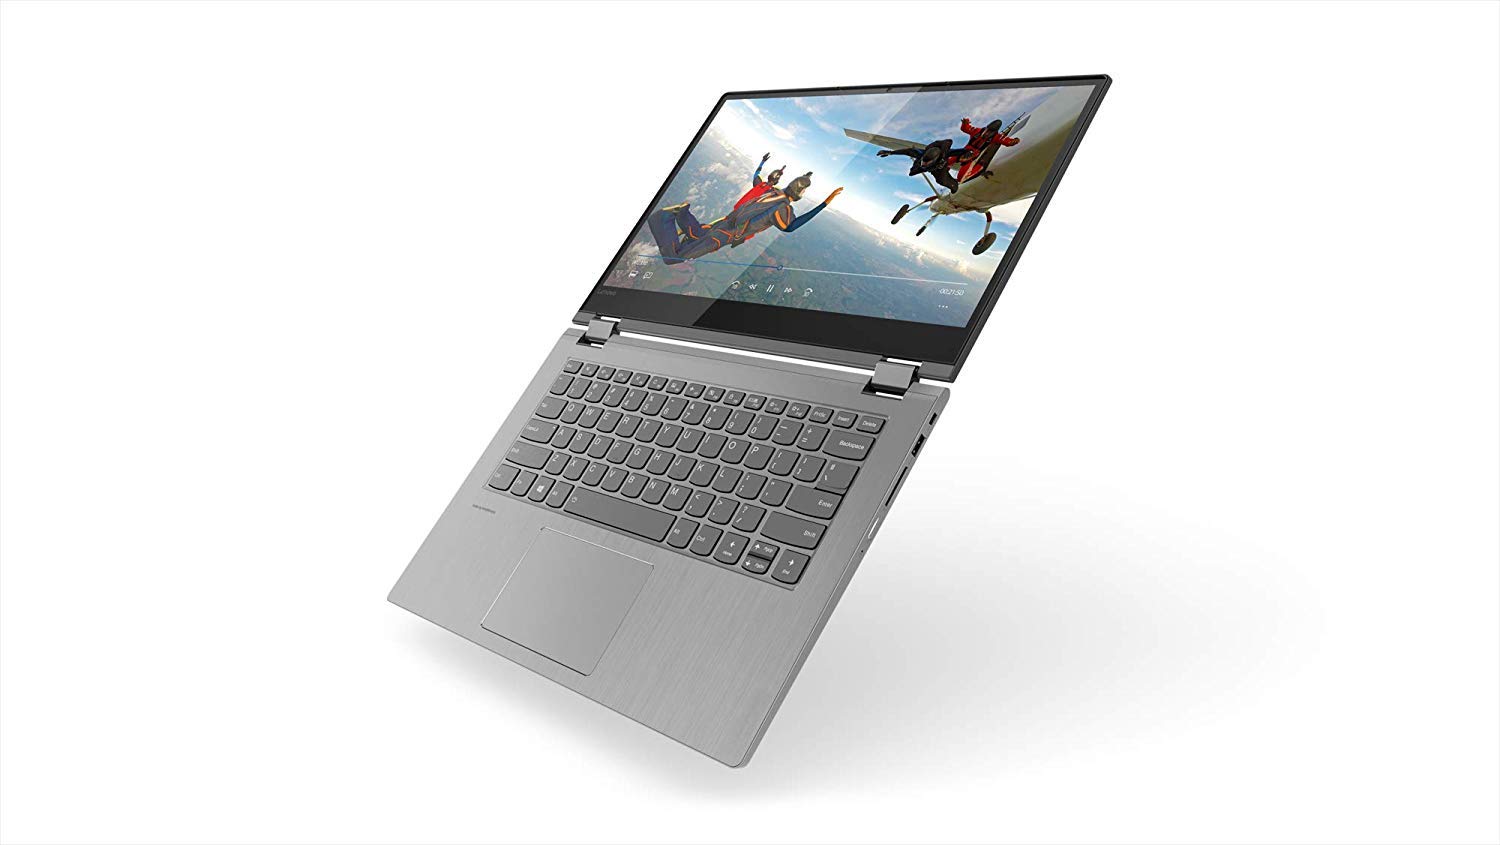 Lenovo Flex 14 2-in-1 Multi-Touch Laptop (AMD Ryzen 3 2200U 2.5 GHz, 4GB DDD4, 128GB SSD, AMD Radeon Vega 3, 14in HD 1366 x 768 Touchscreen LCD, WiFi / Bluetooth, Windows 10 64-Bit)